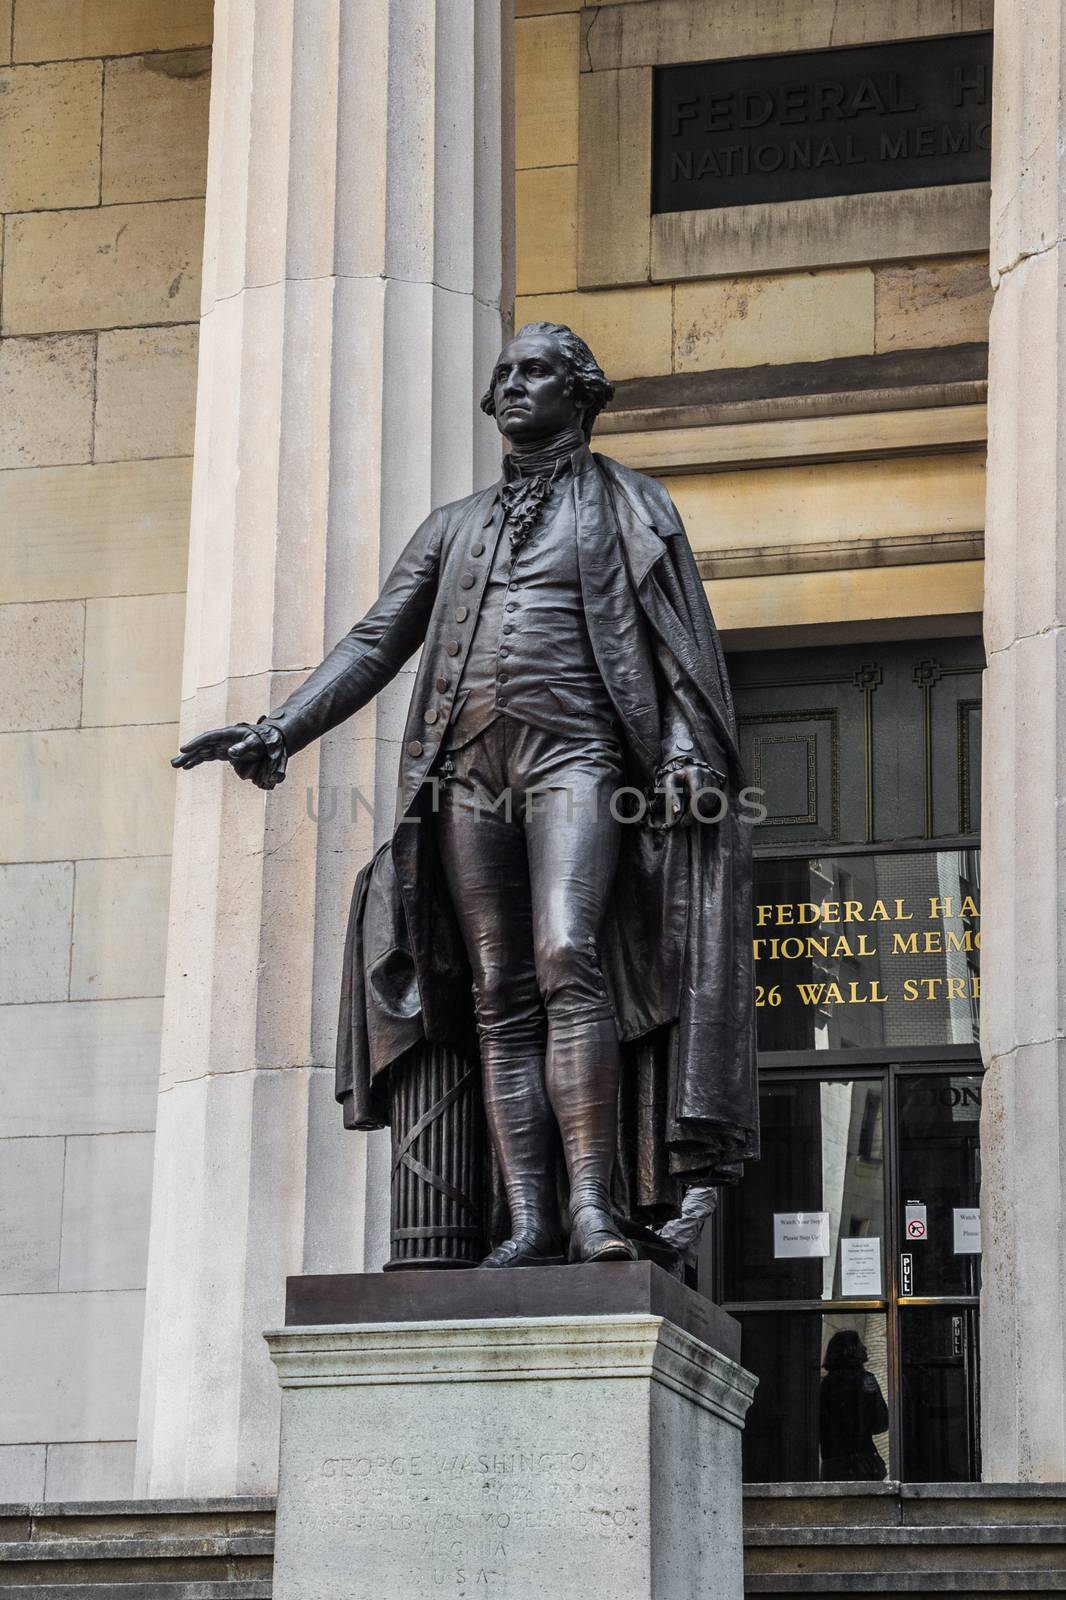 Statue of George Washington at New York Manhattan financial district Wall Street